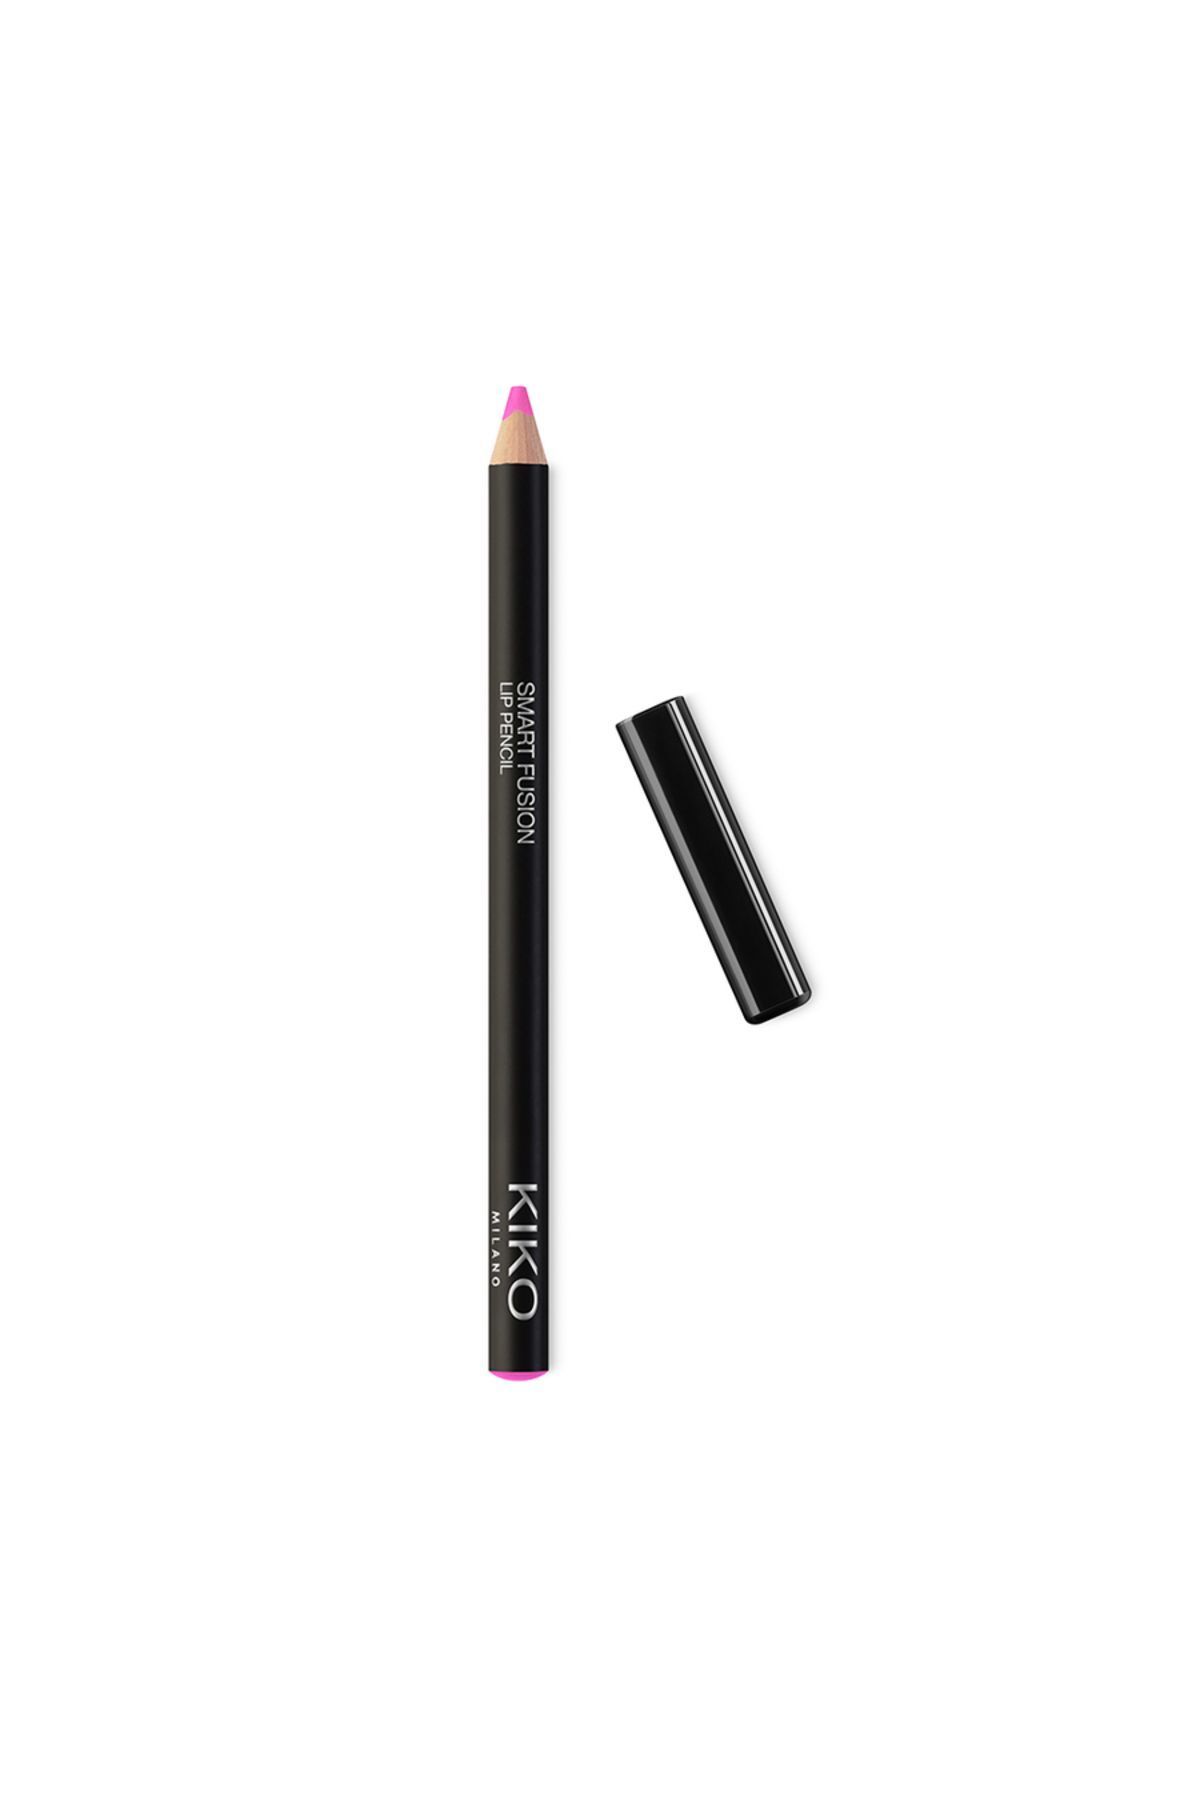 KIKO DUDAK KALEMİ - Smart Fusion Lip Pencil - 526 Orchid Pink